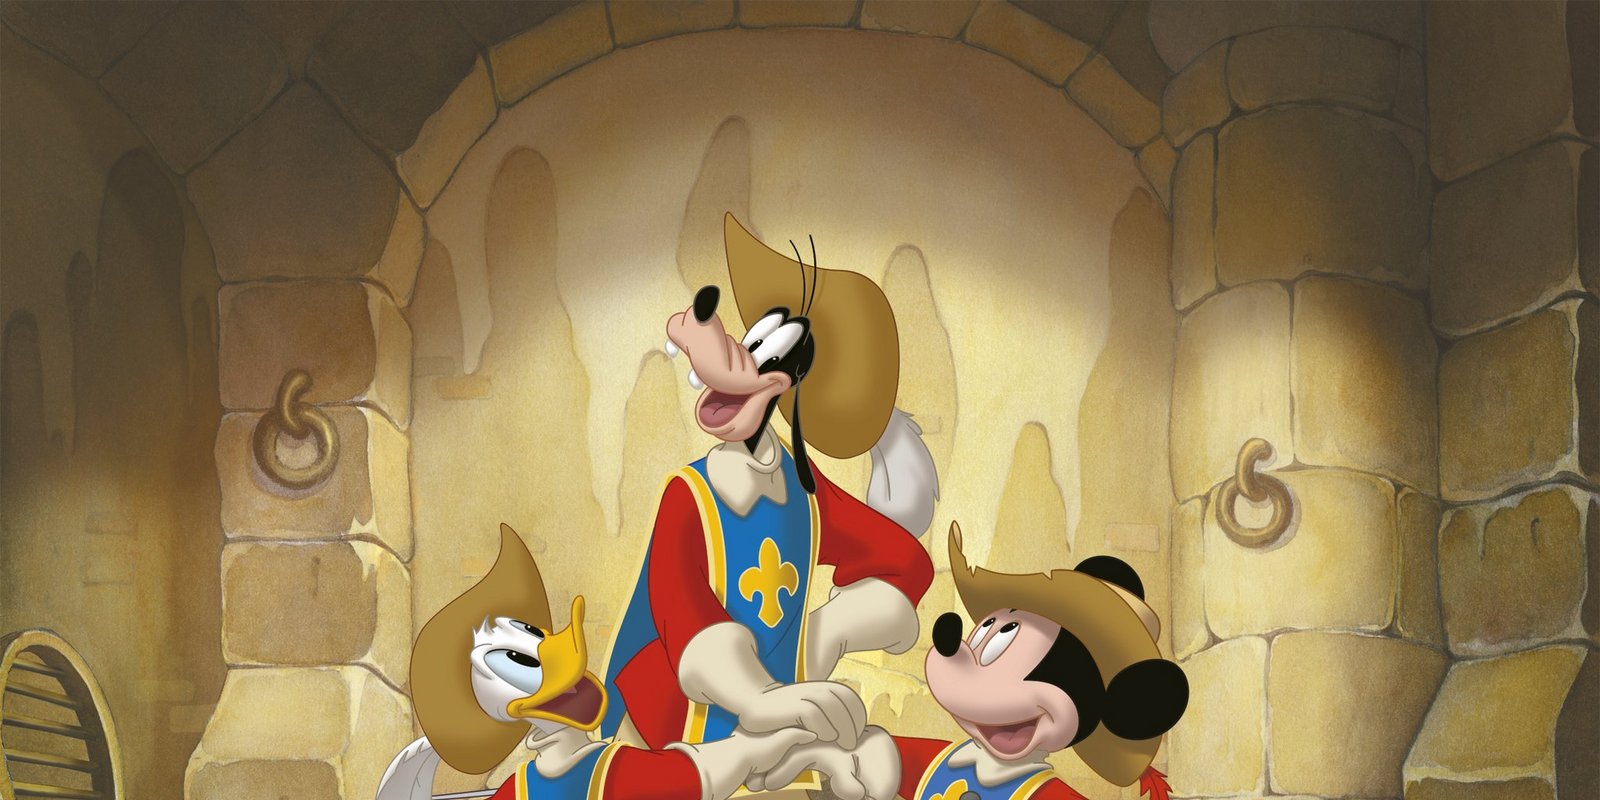 Micky, Donald, Goofy - Die drei Musketiere